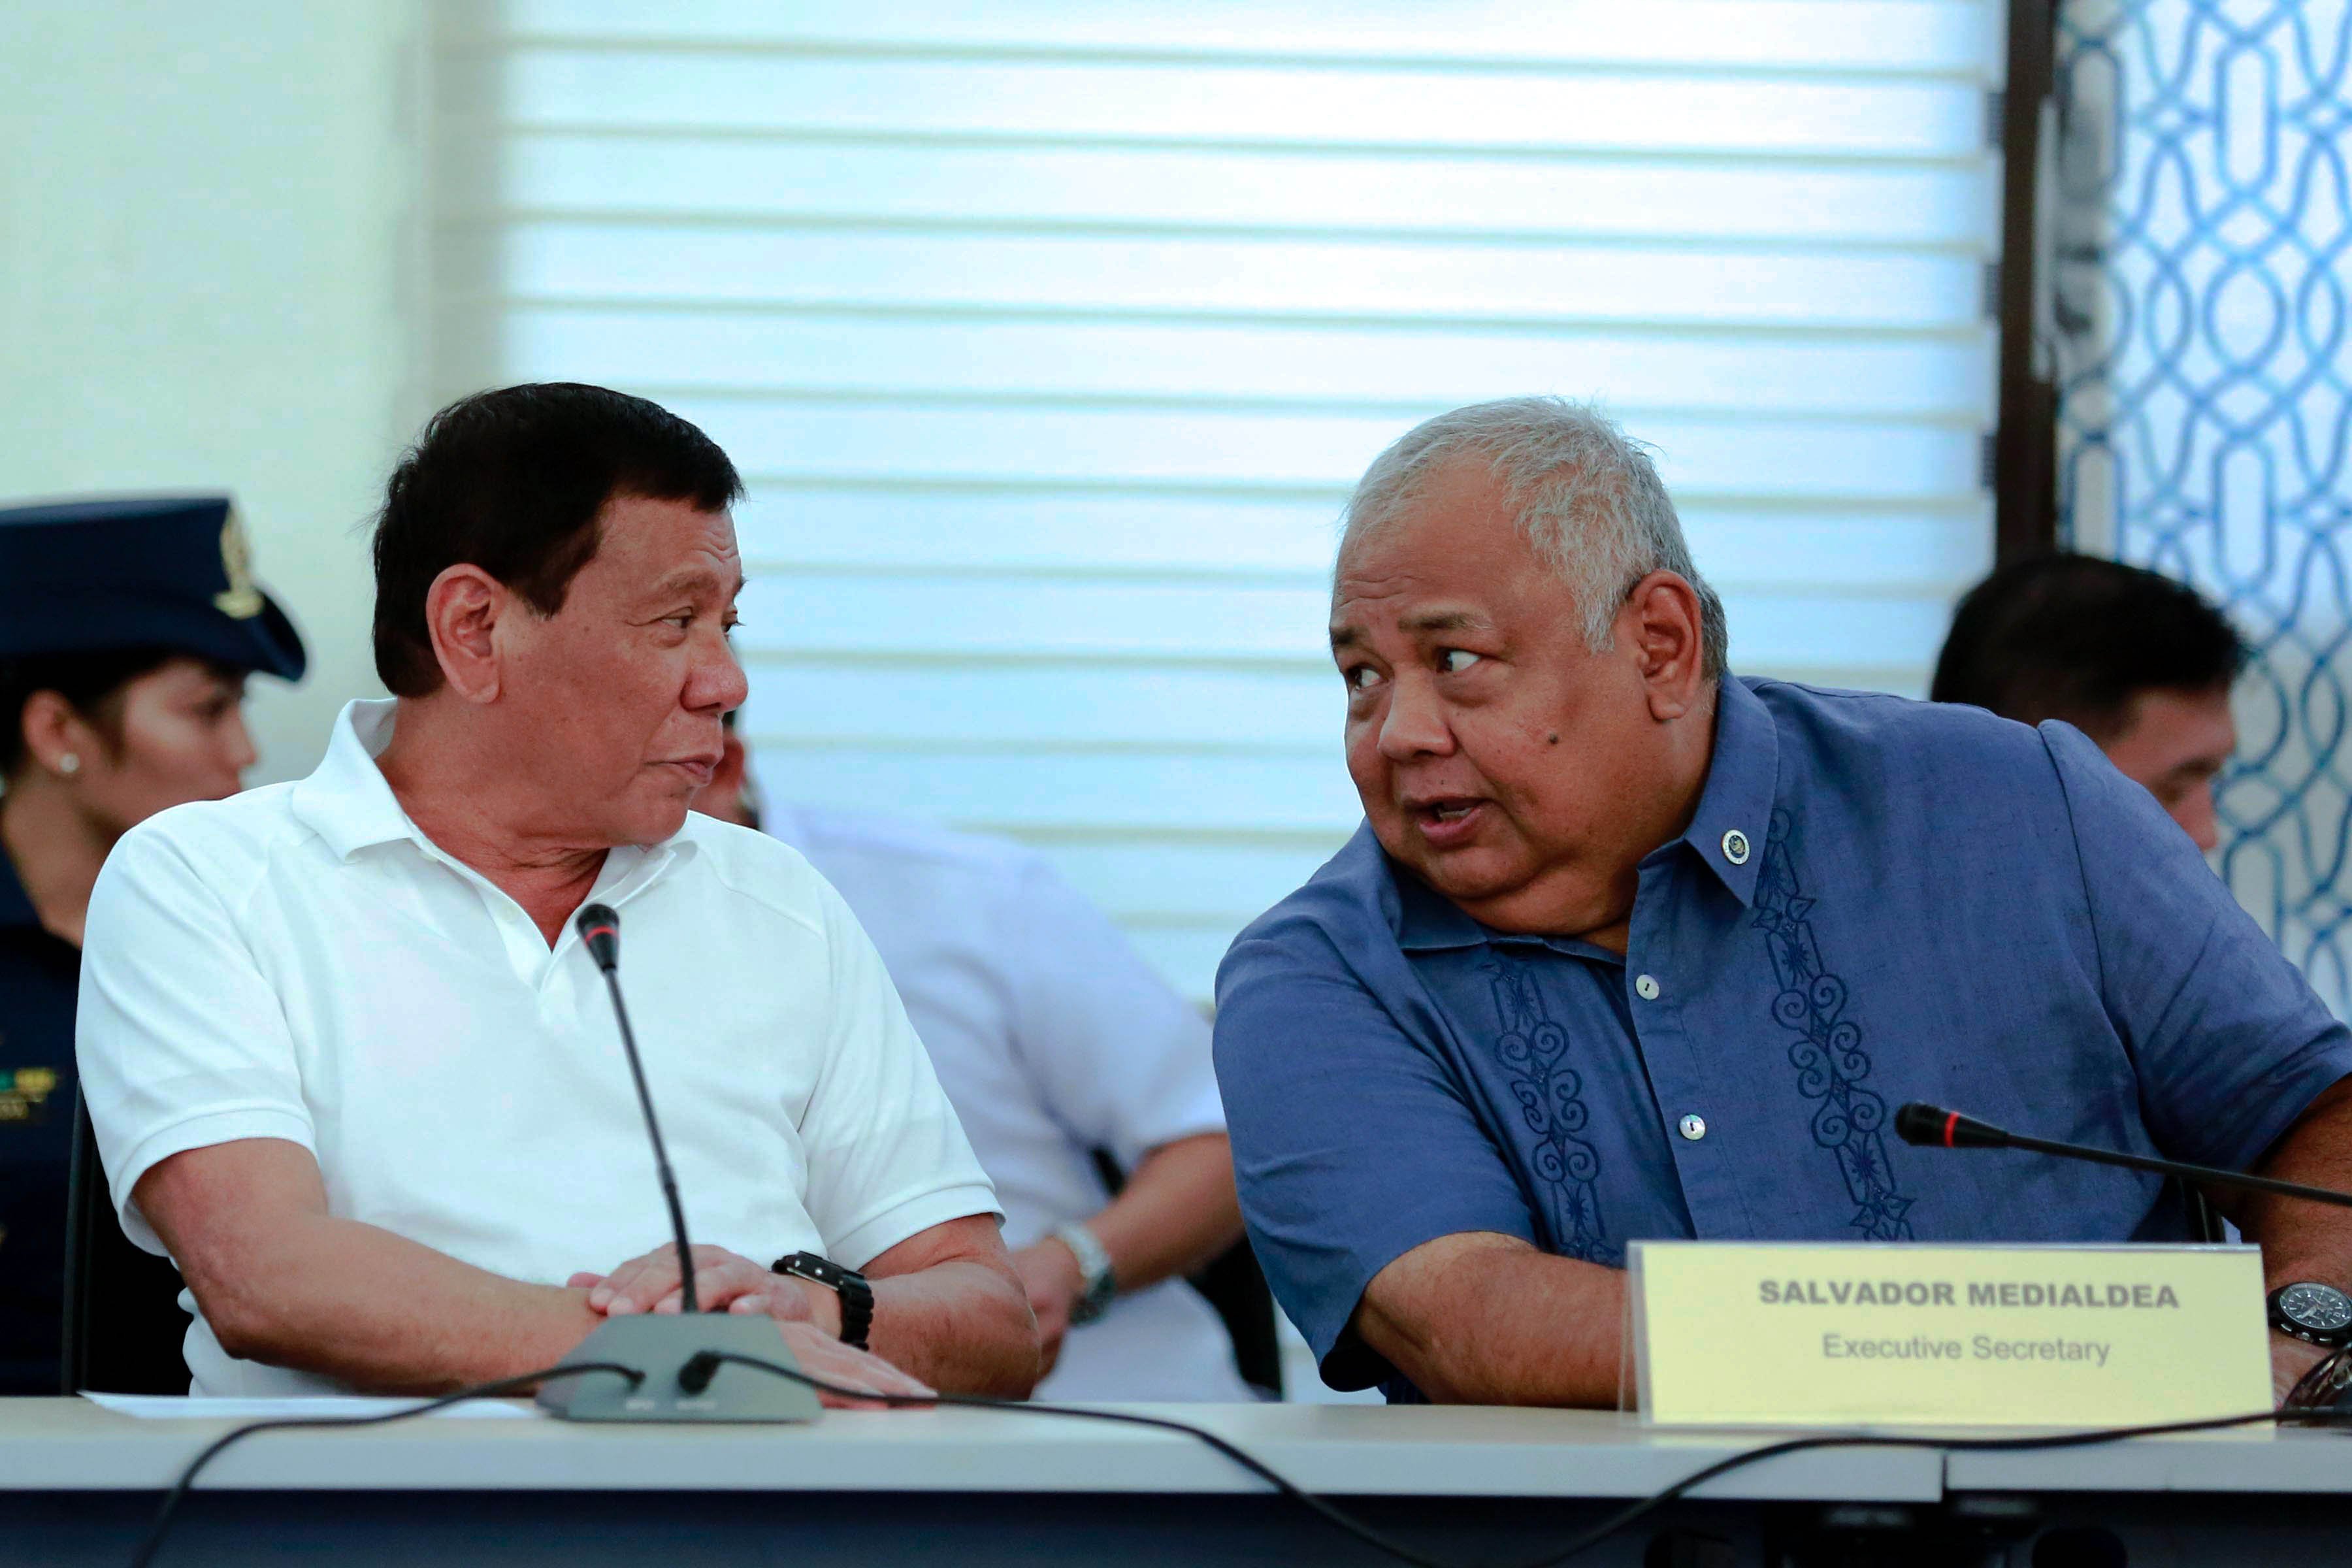 President Duterte speaks with Executive Secretary Salvador Medialdea